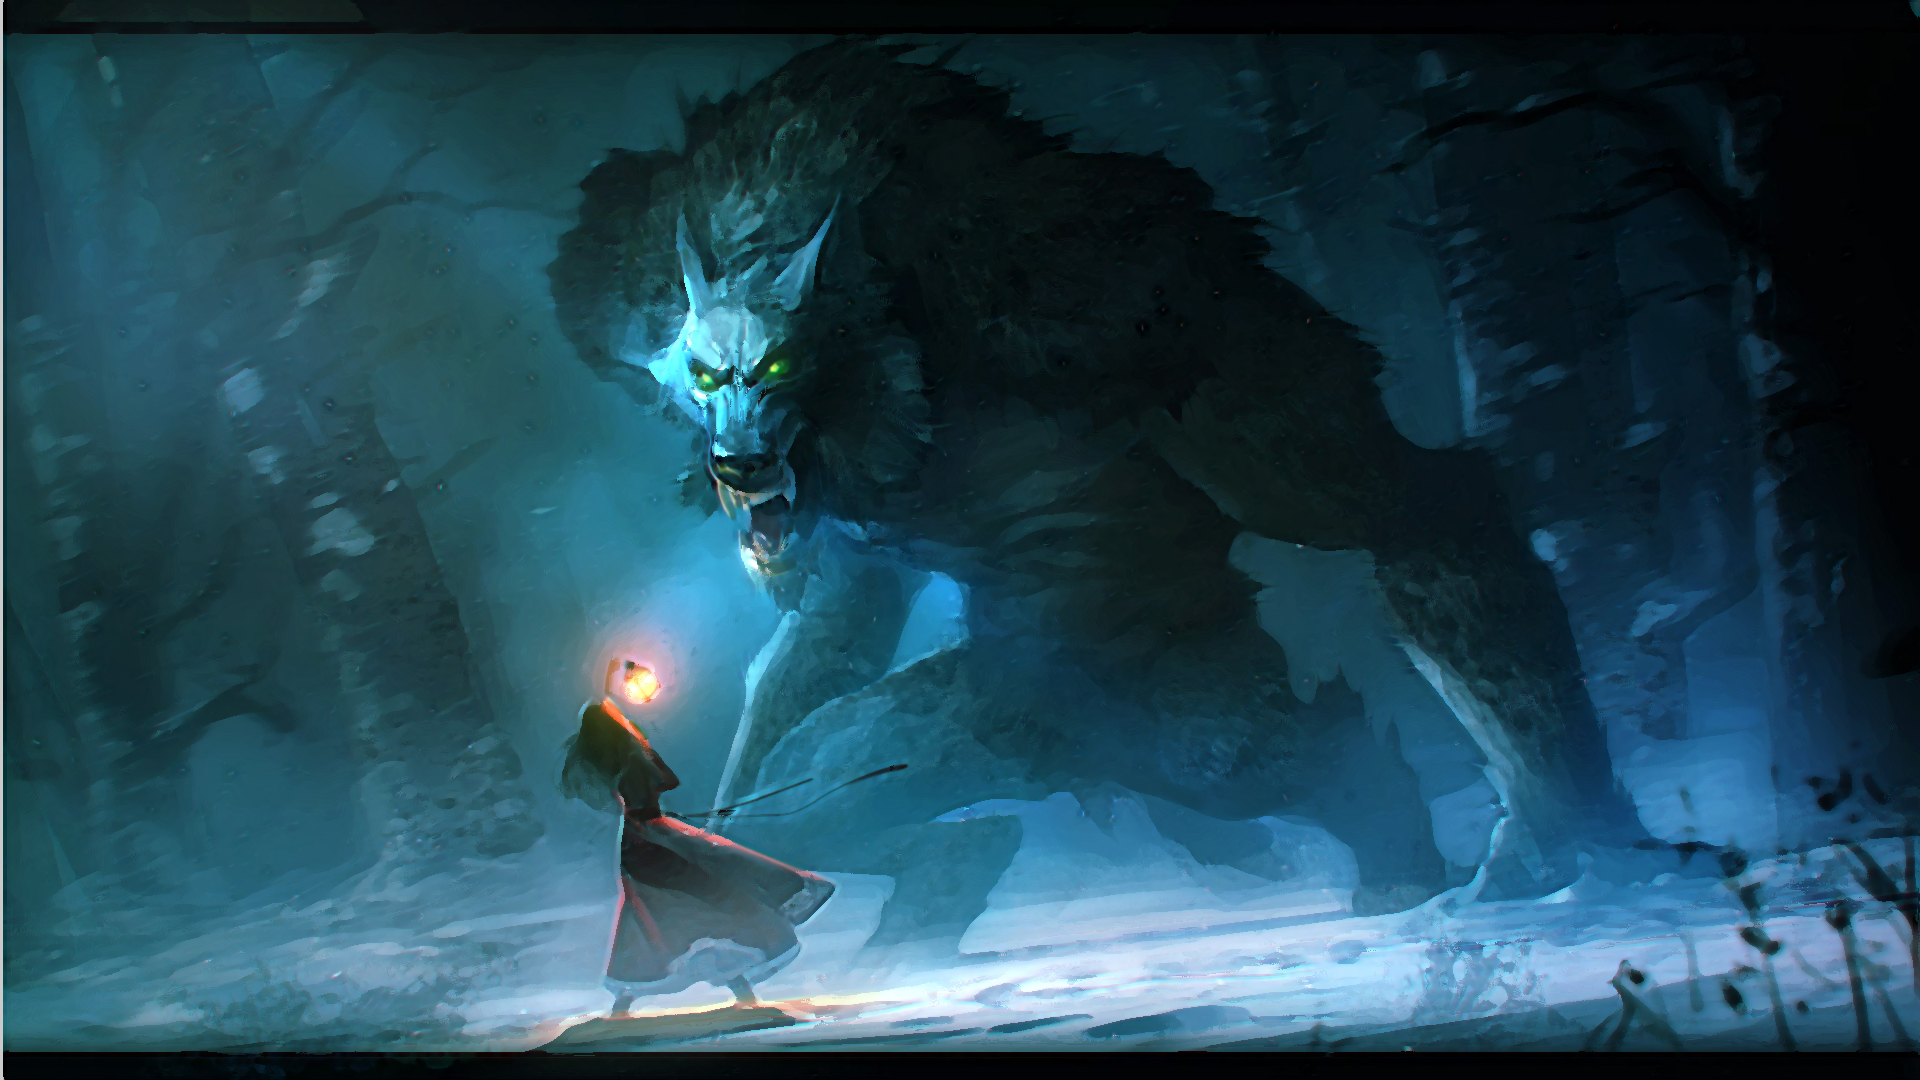 Werewolf Full HD Wallpaper By Niconoff Deviantart